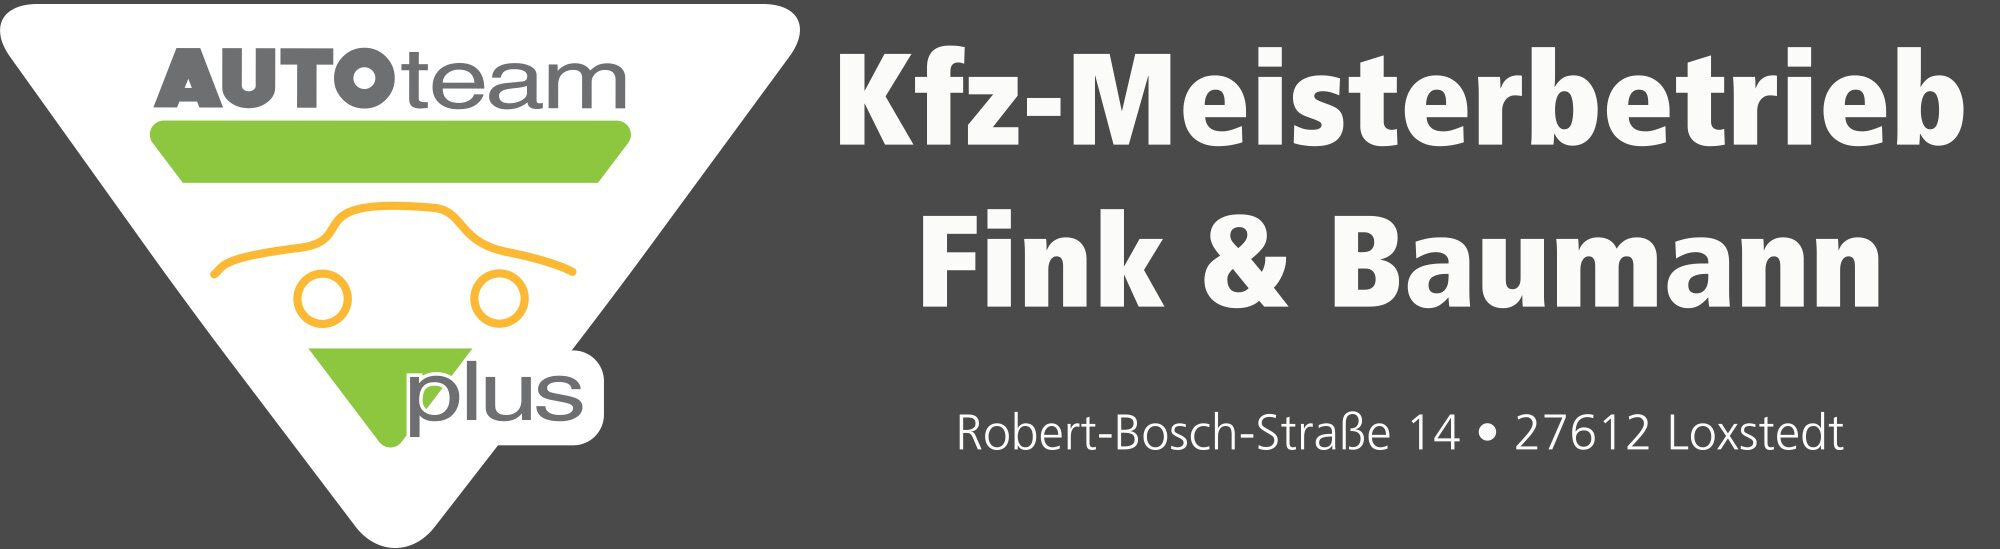 Kfz-Meisterbetrieb Fink & Baumann